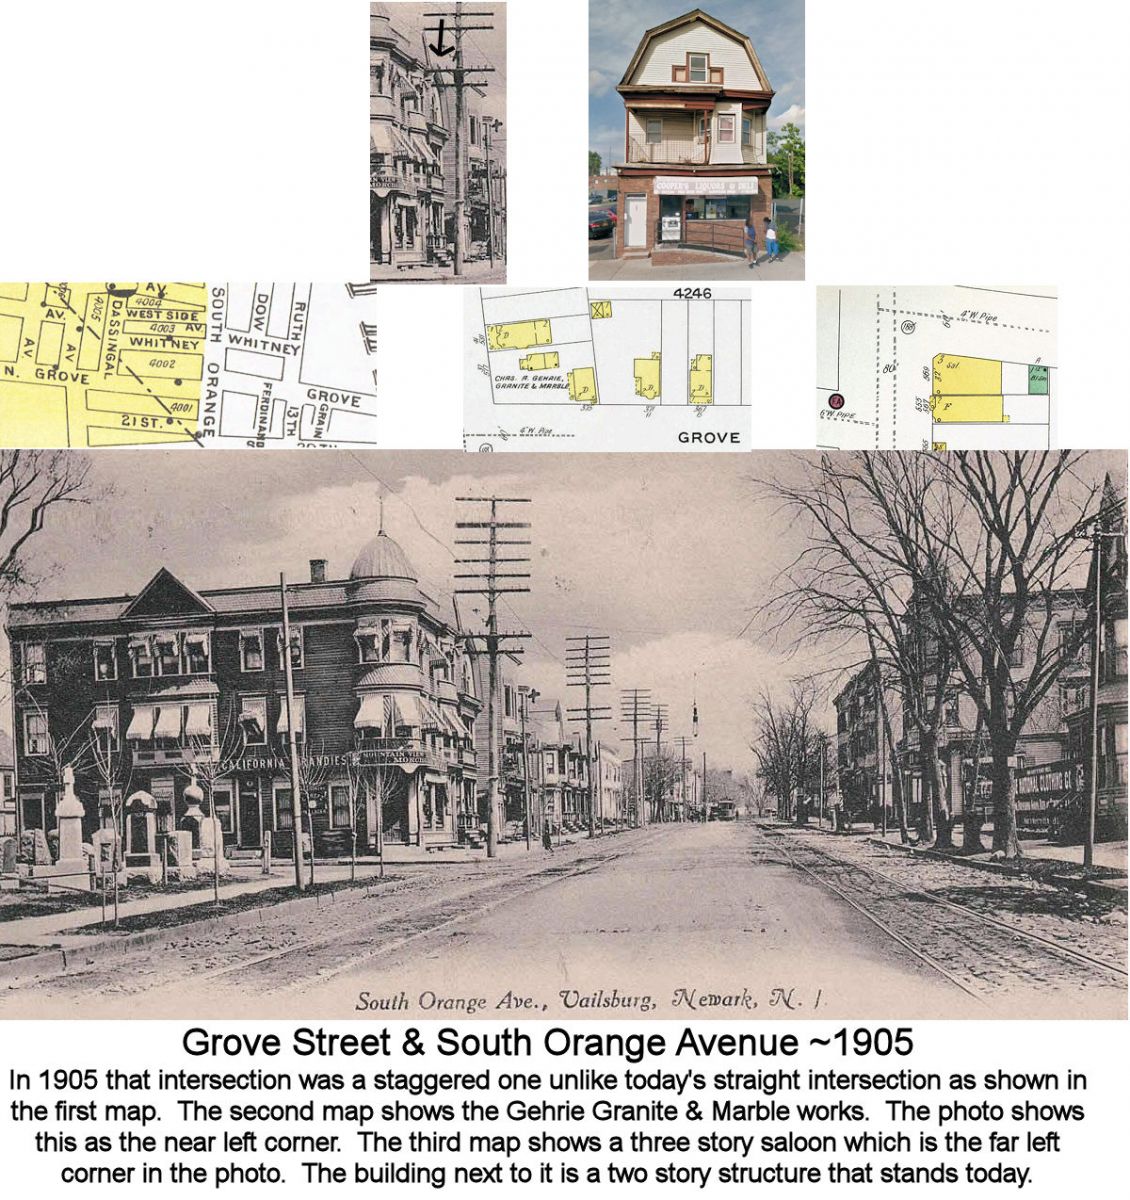 South Orange Avenue & Grove Street
Postcard
